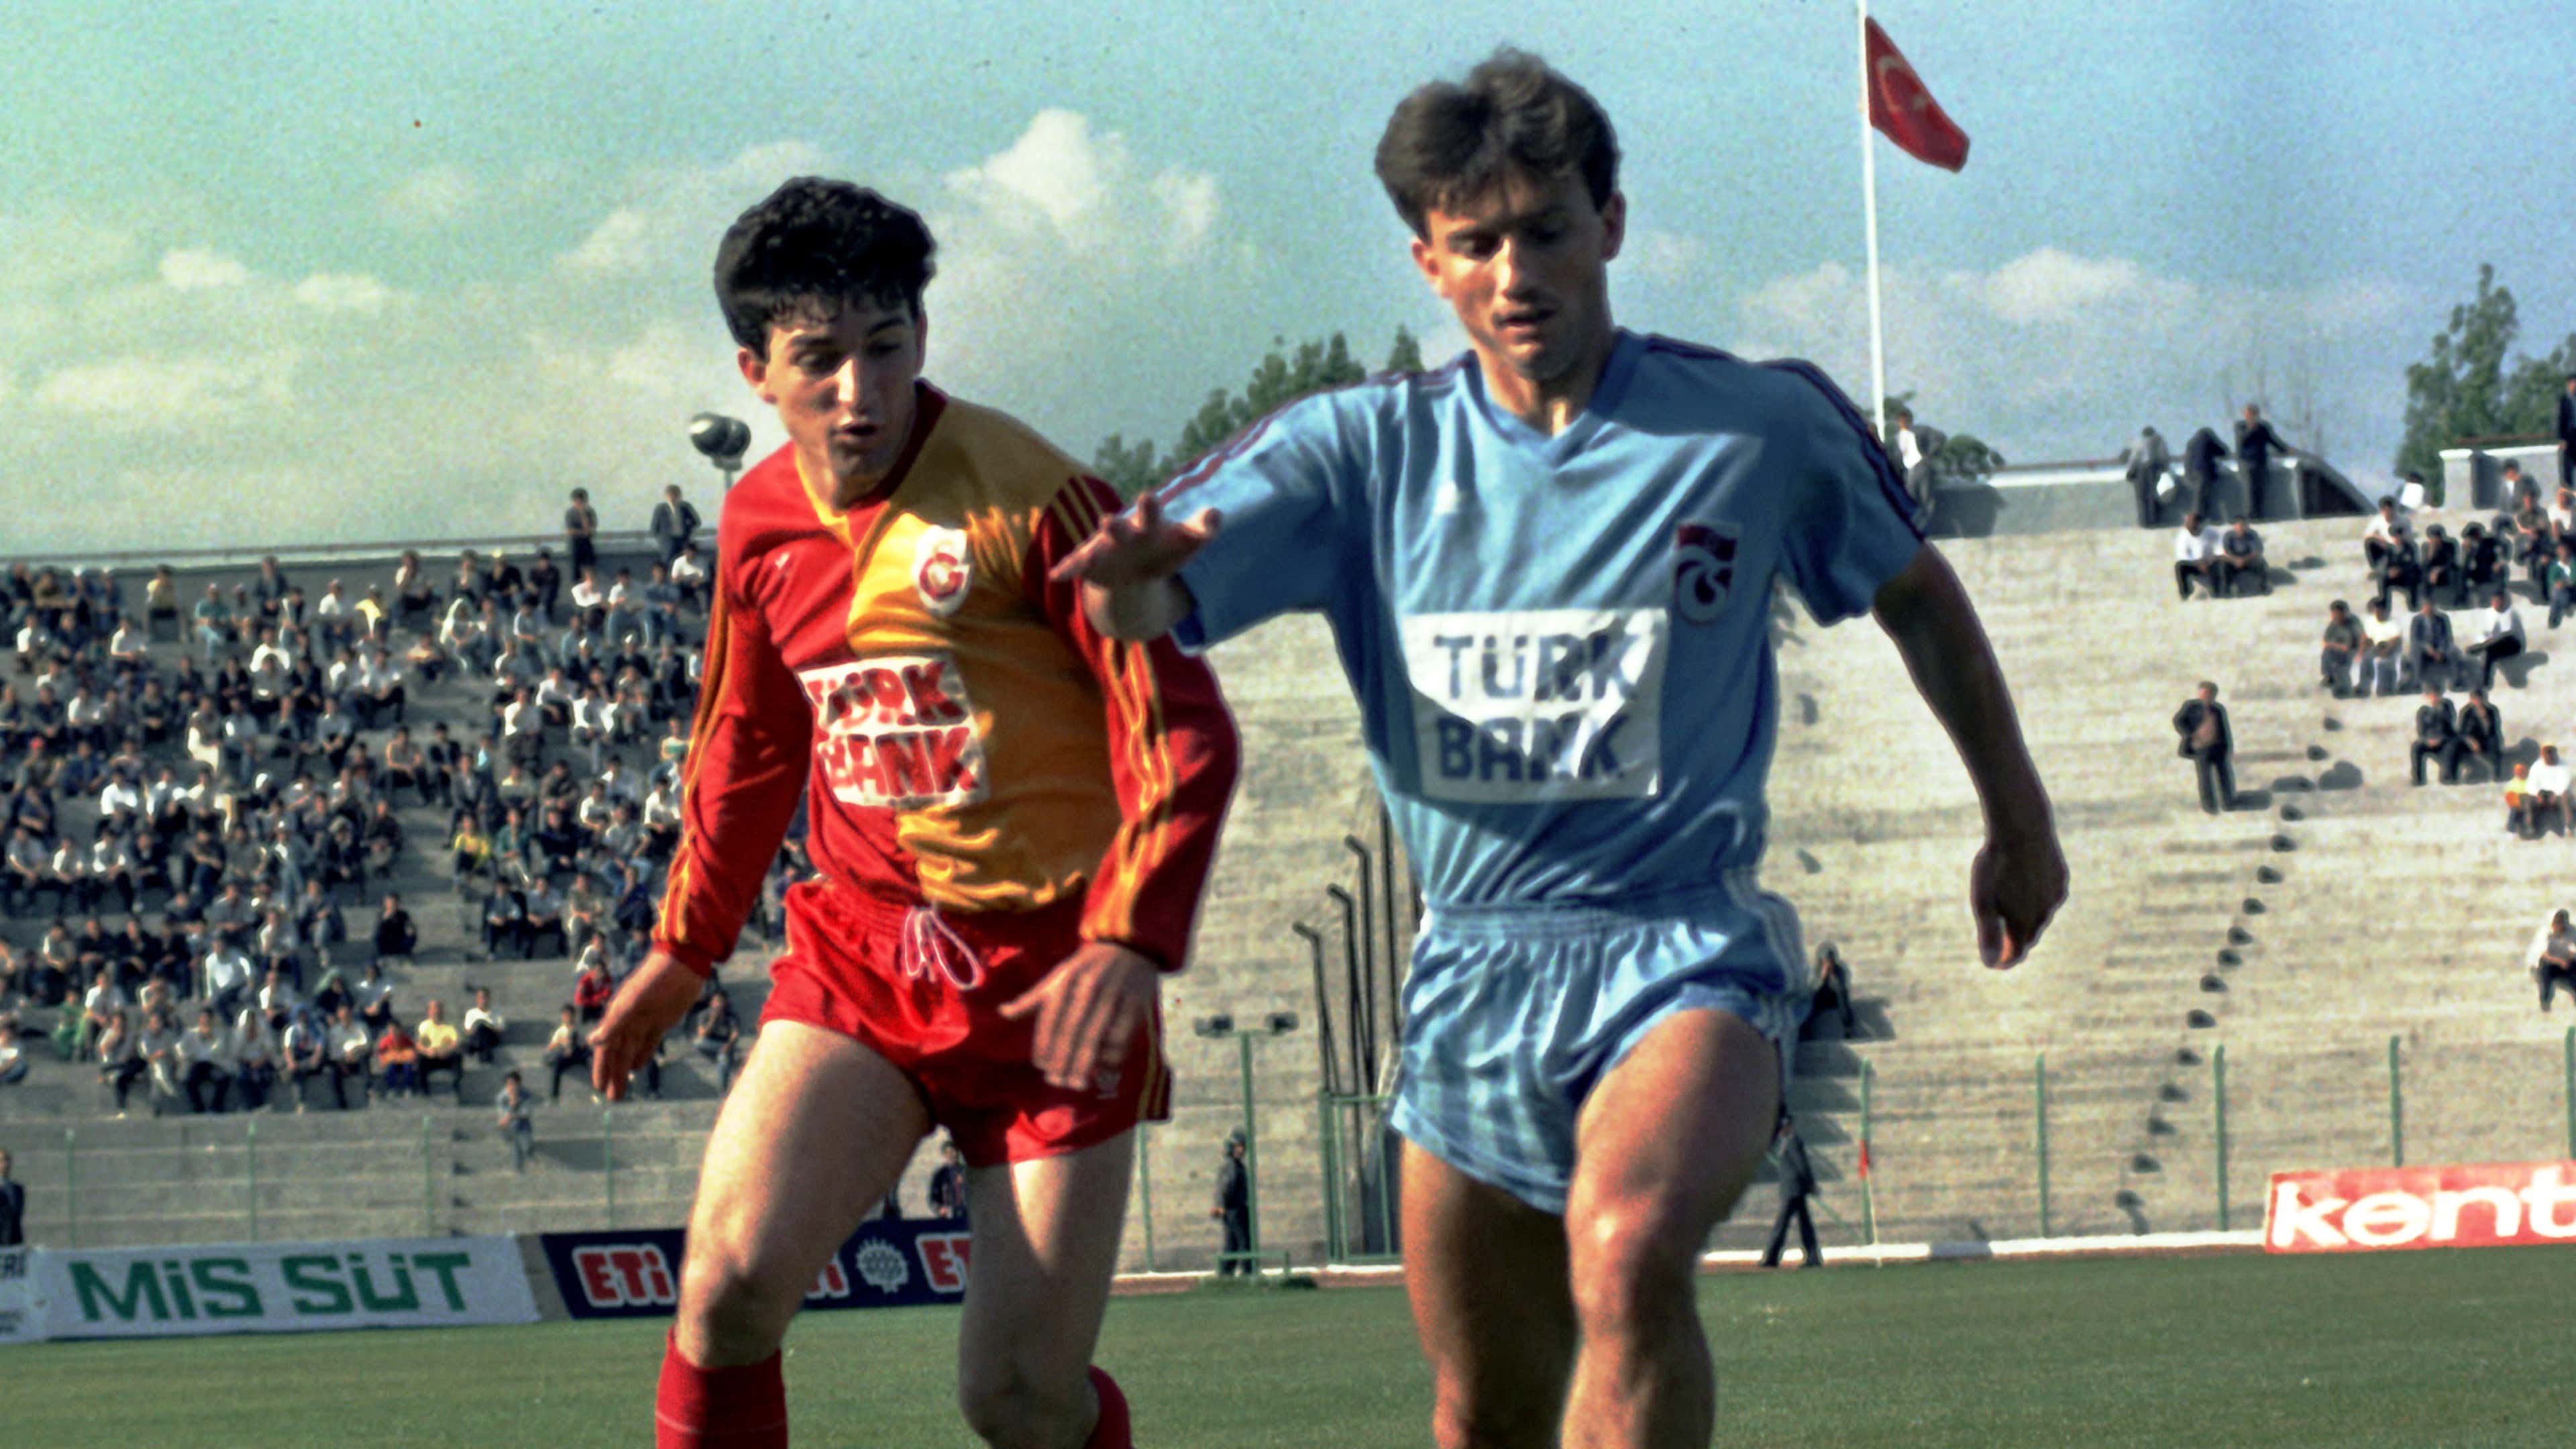 Hami Mandırali Trabzonspor vs. Galatasaray 05/23/90